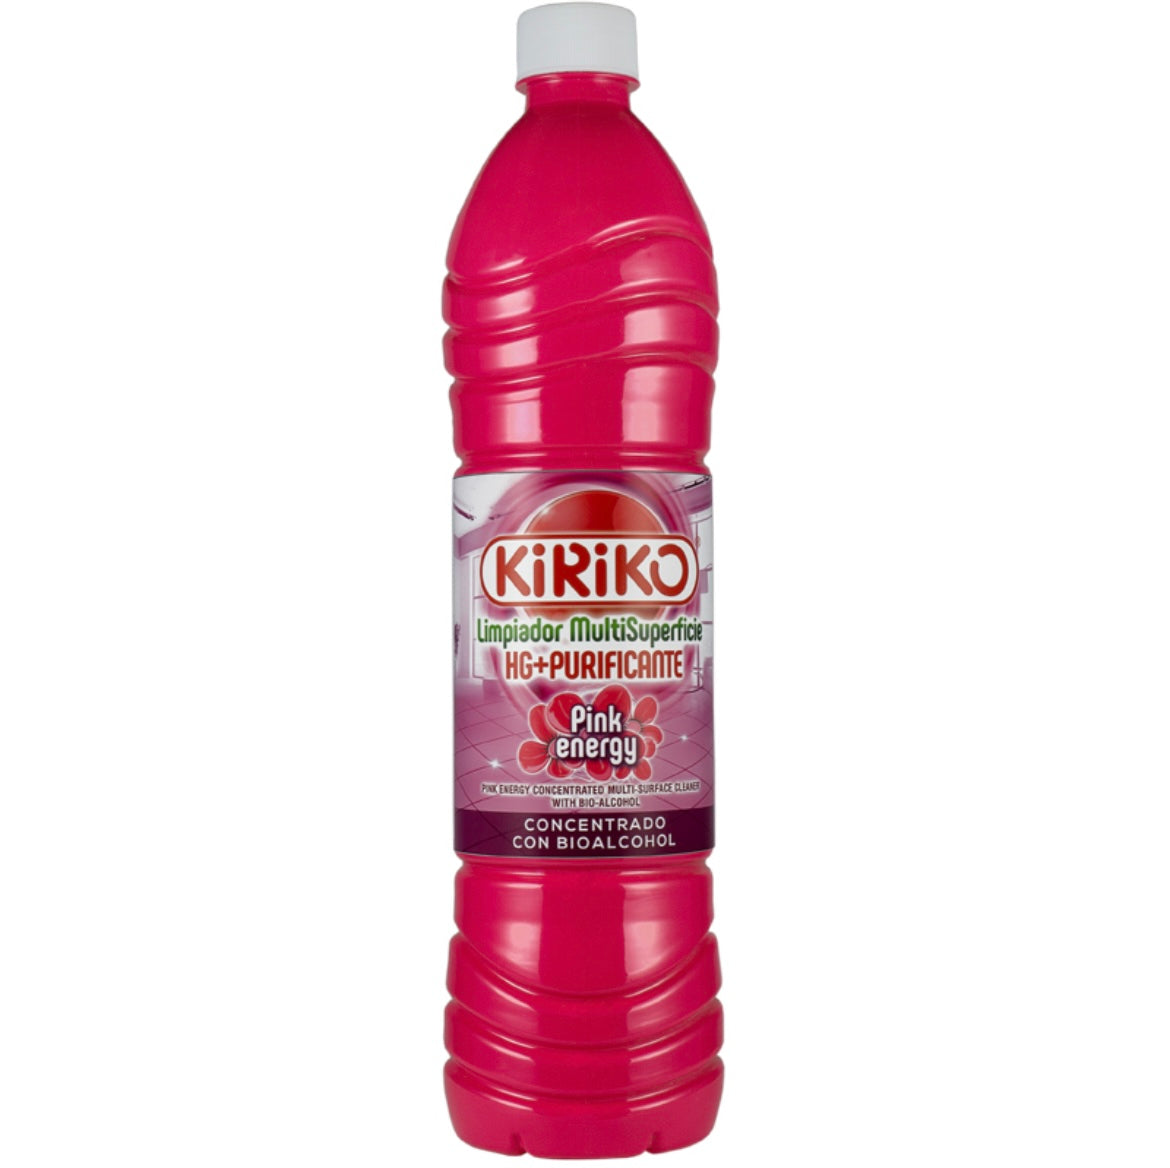 Kiriko Limpiador Multi SuperFicie HG+Puriflcante-Pink Energy